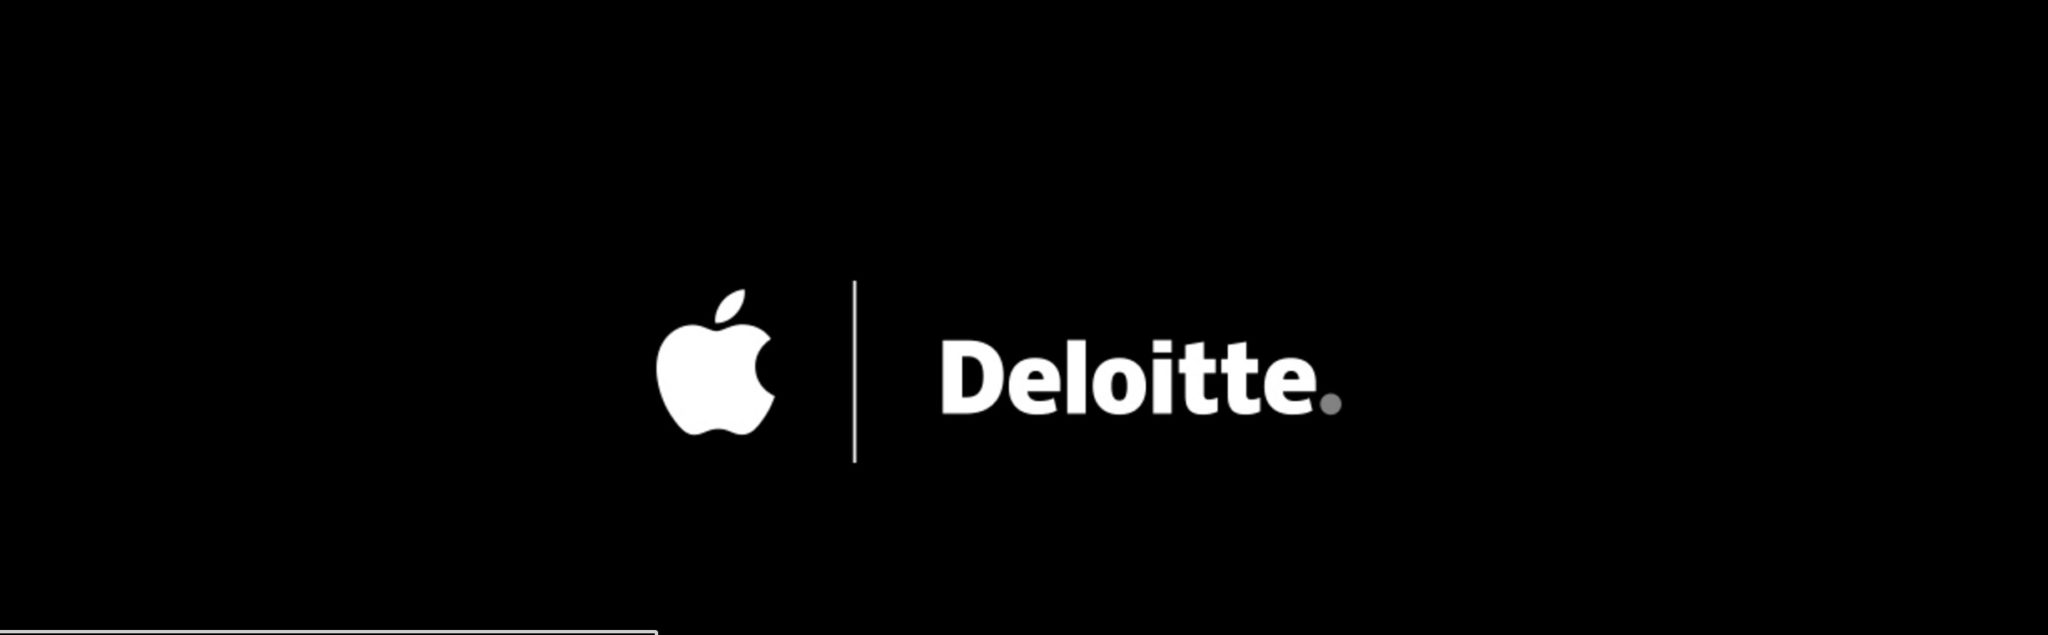 Deloitte et Apple